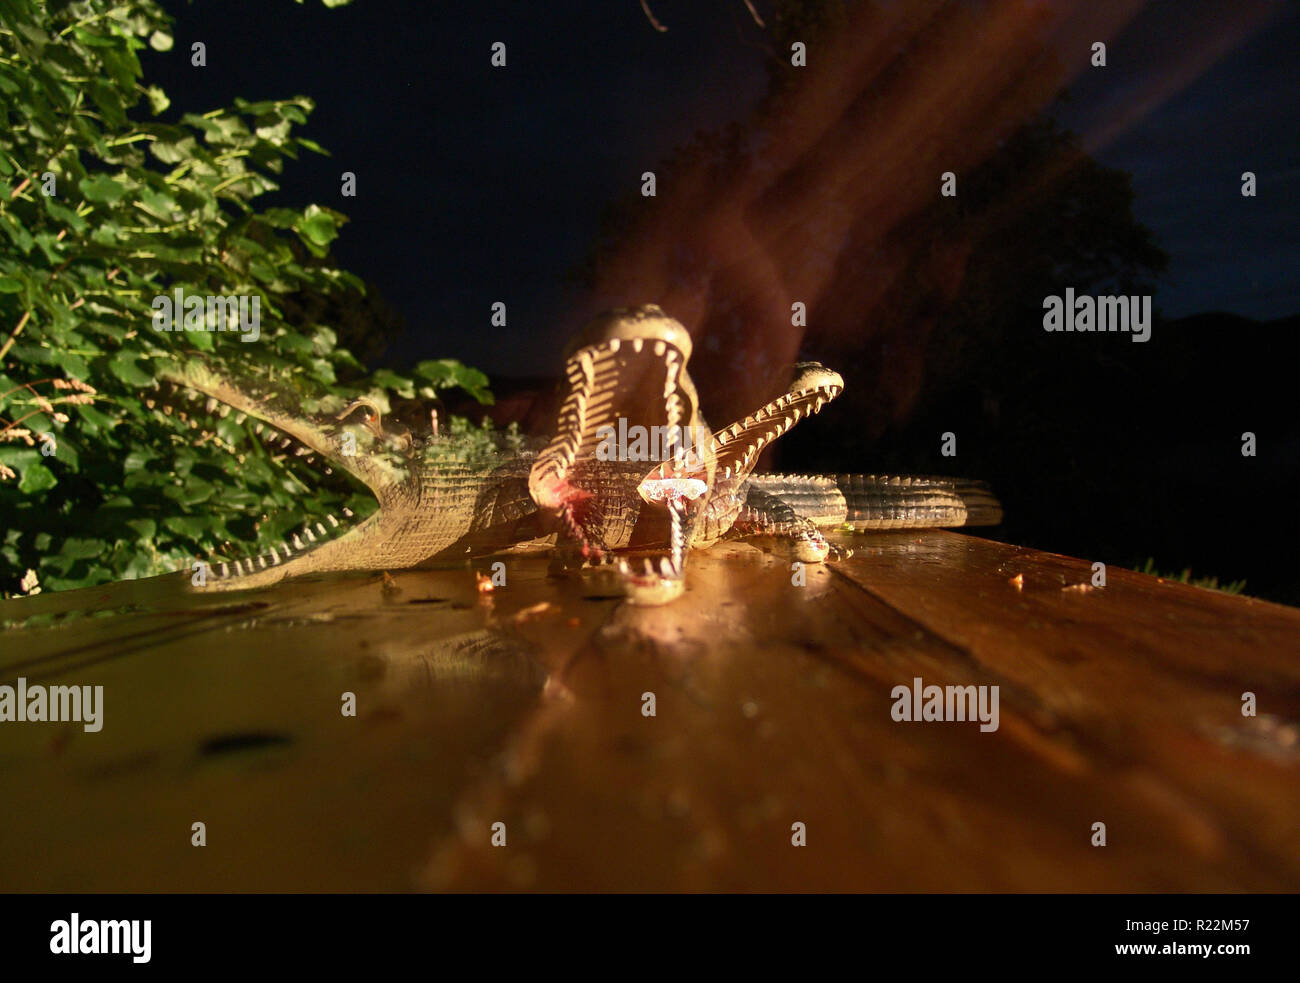 Das Krokodil Angriff Stockfoto